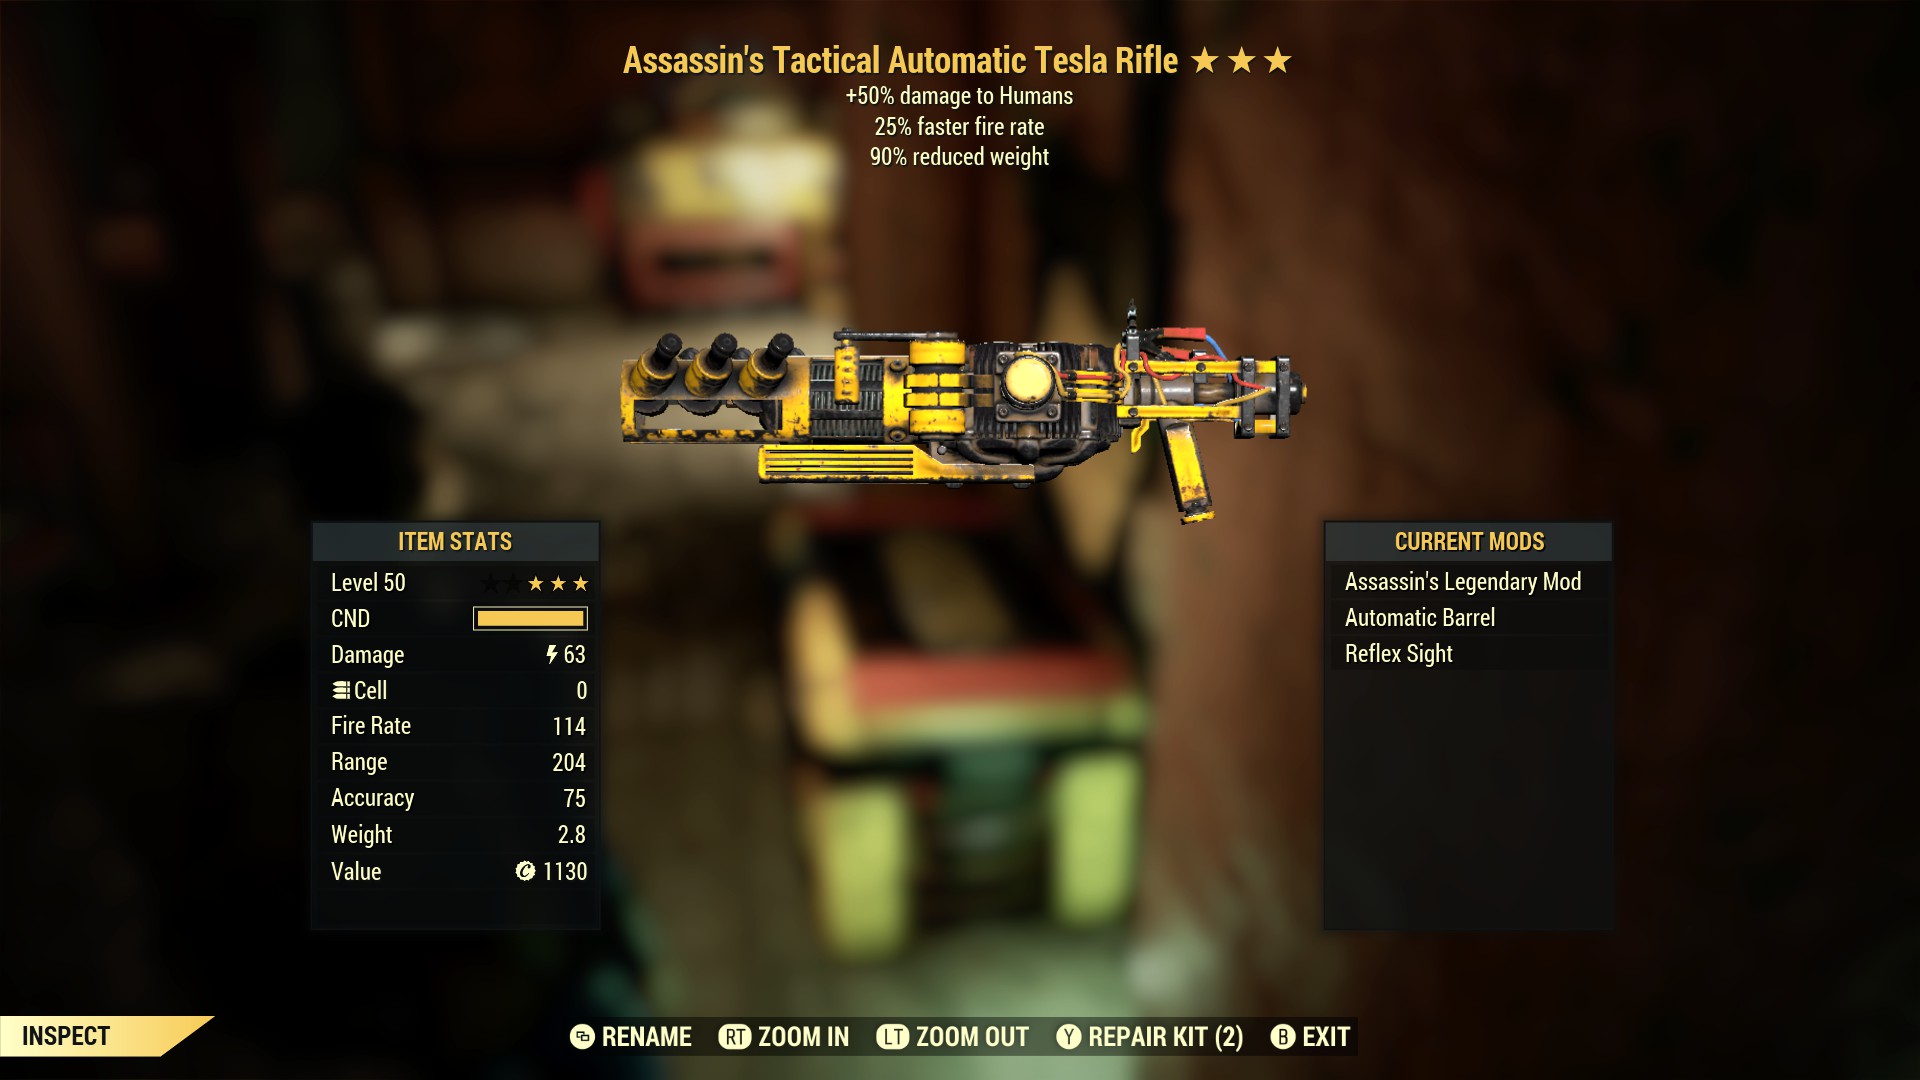 Assassin's Tactical Automatic Tesla Rifle